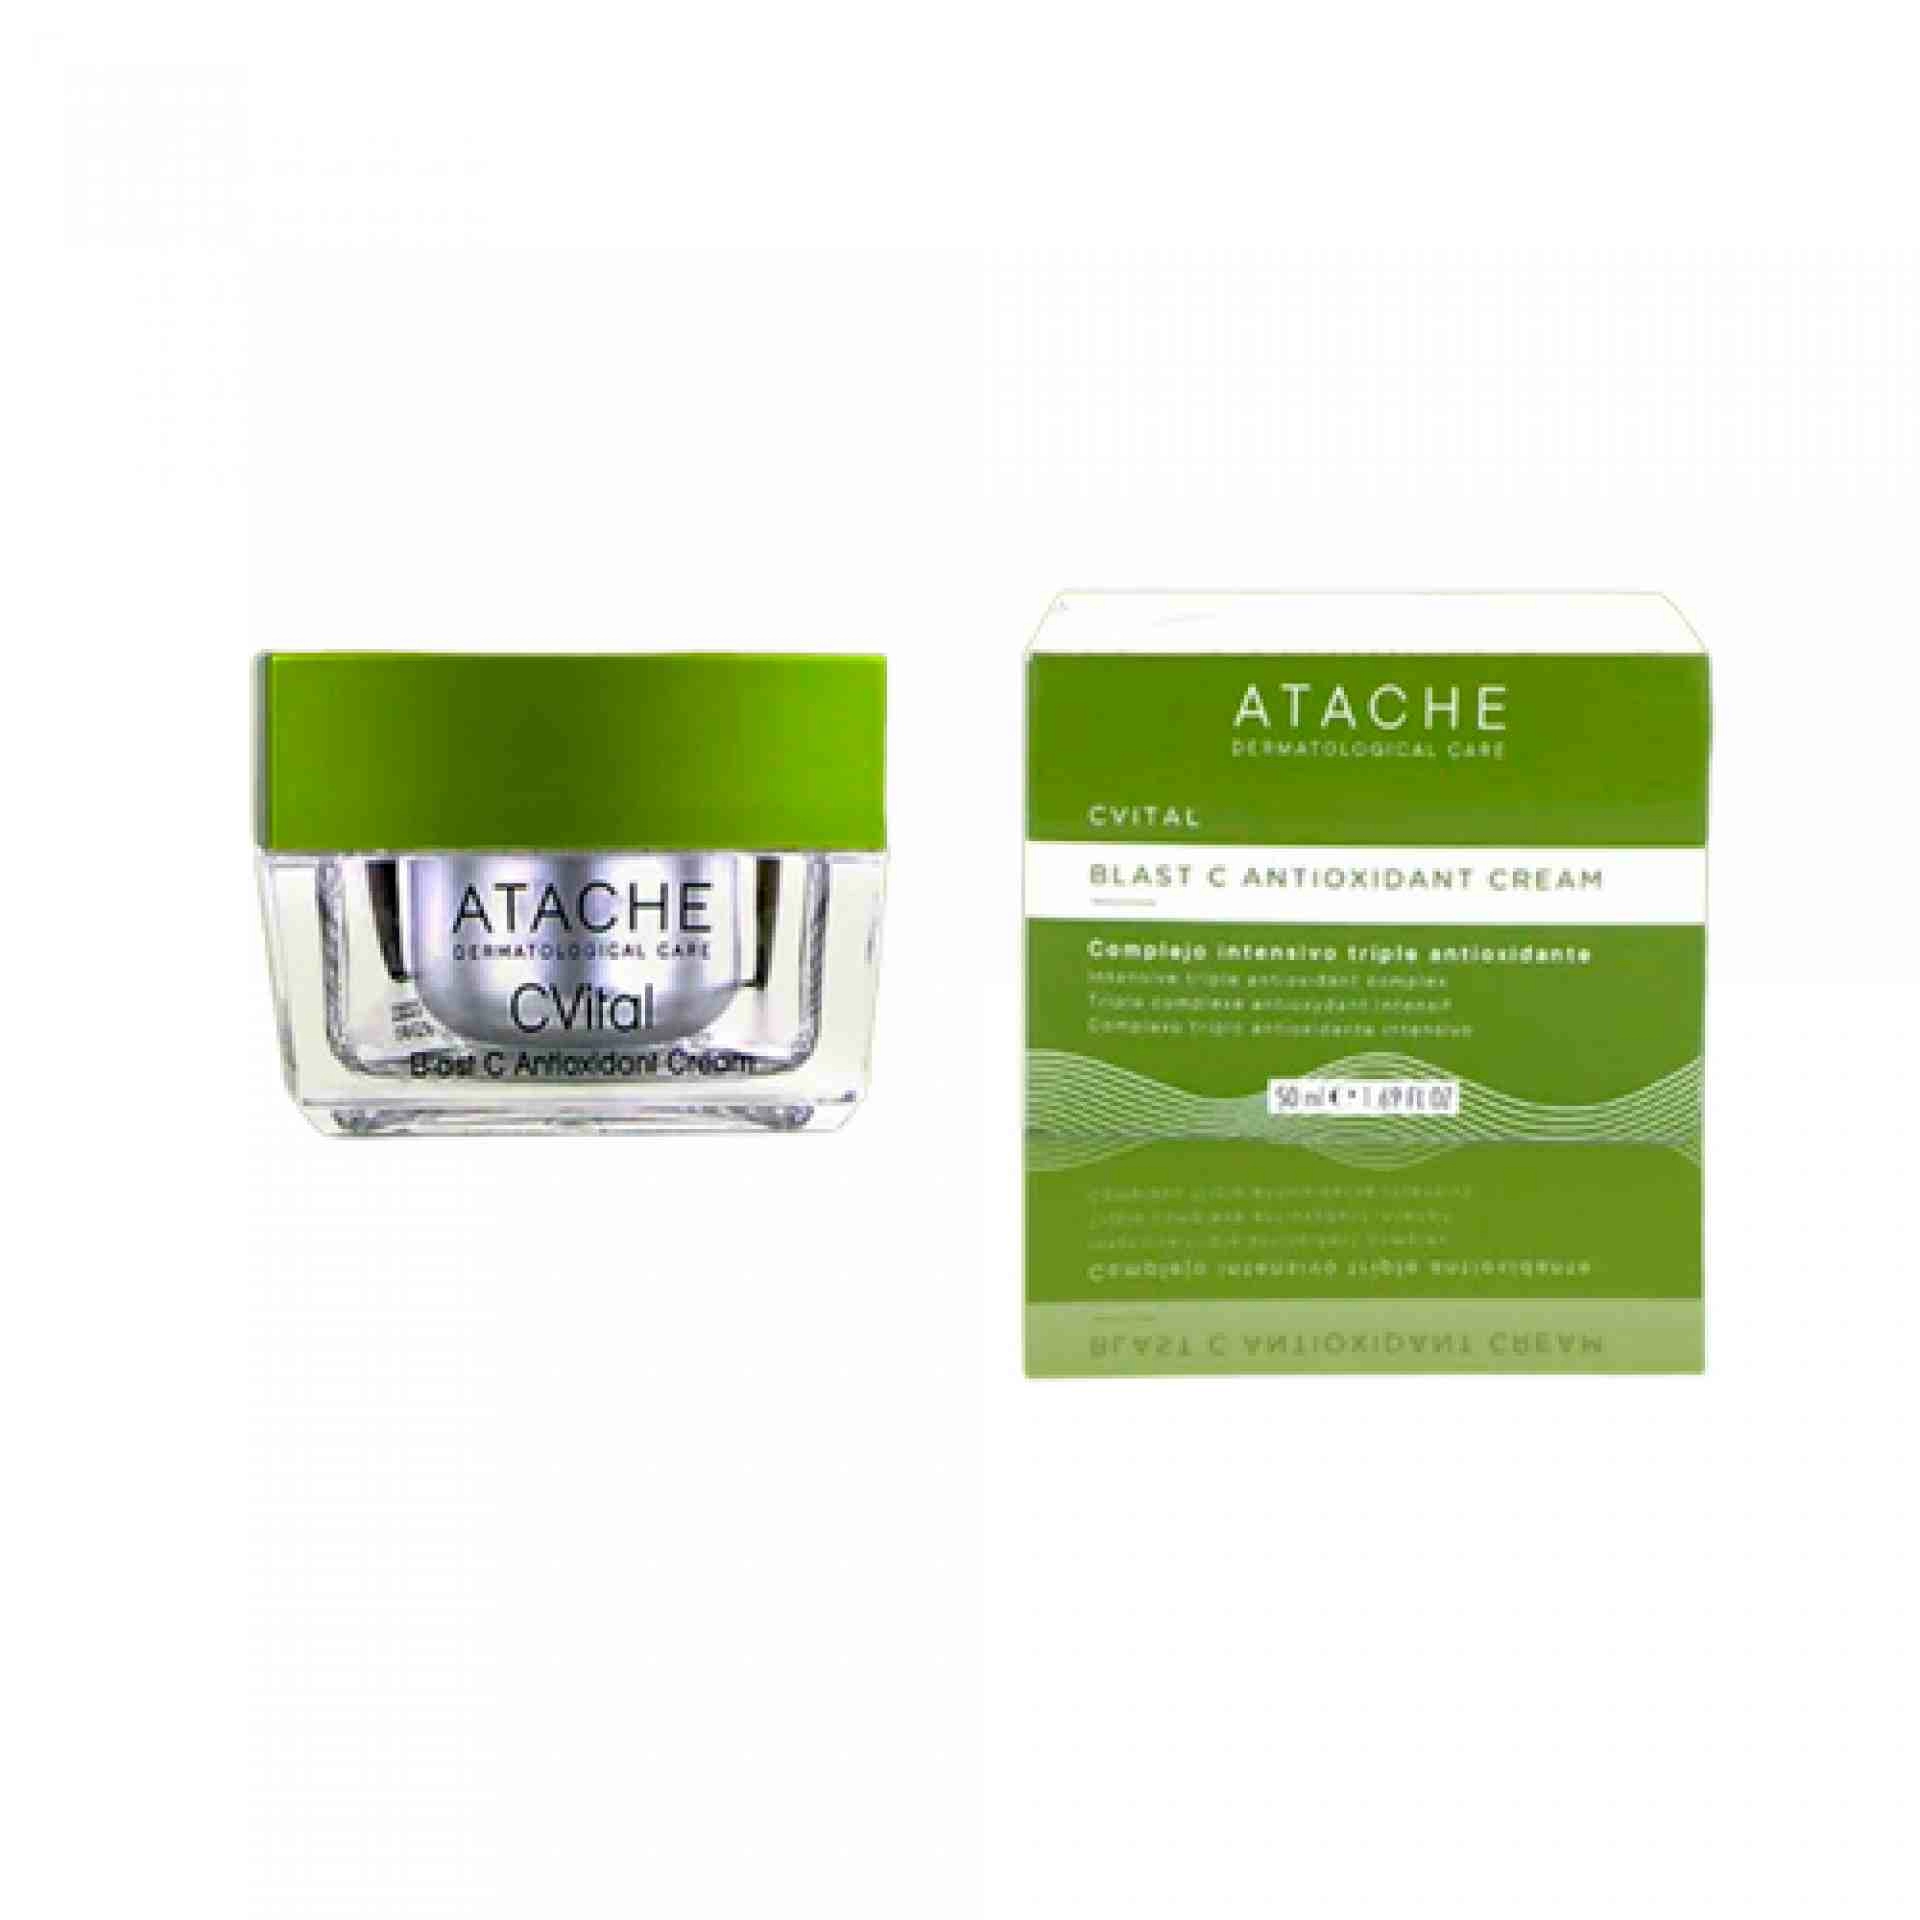 Blast C Antioxidant Cream | Crema Facial Iluminadora 50 ml - CVital - Atache ®